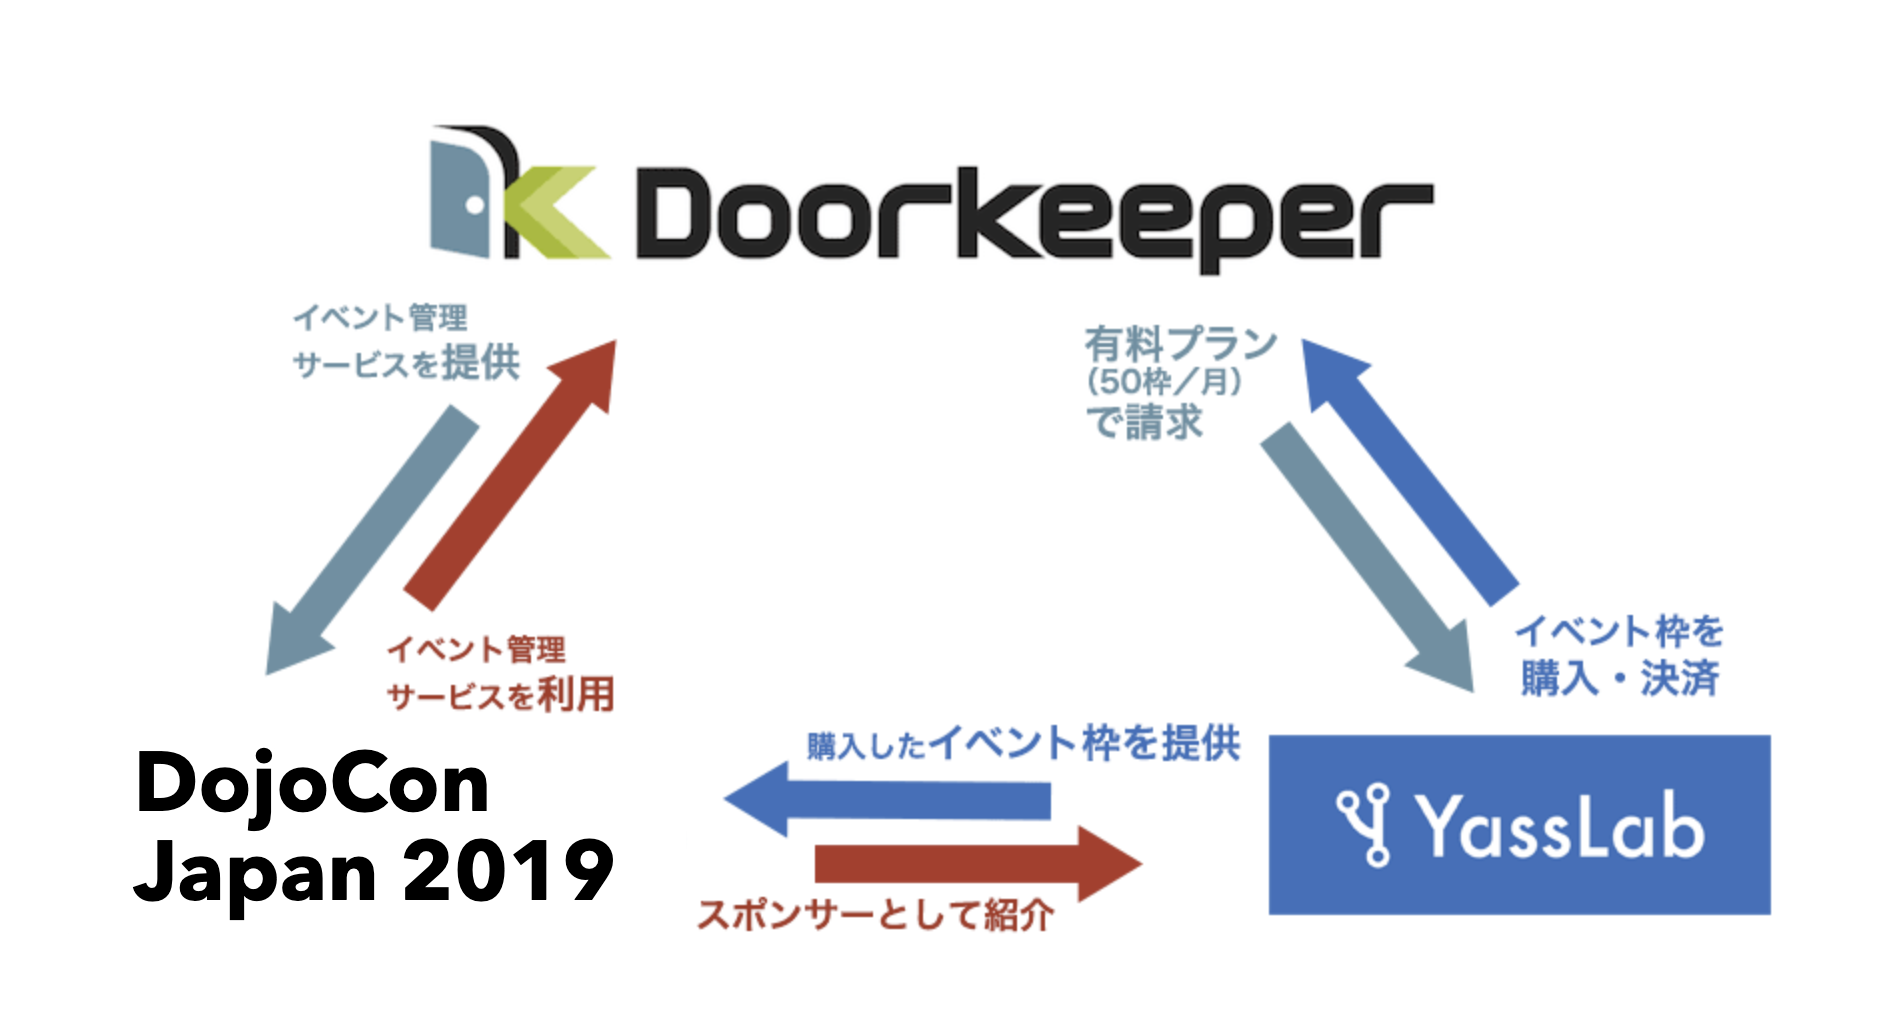 Doorkeeper スポンサーシップの仕組み